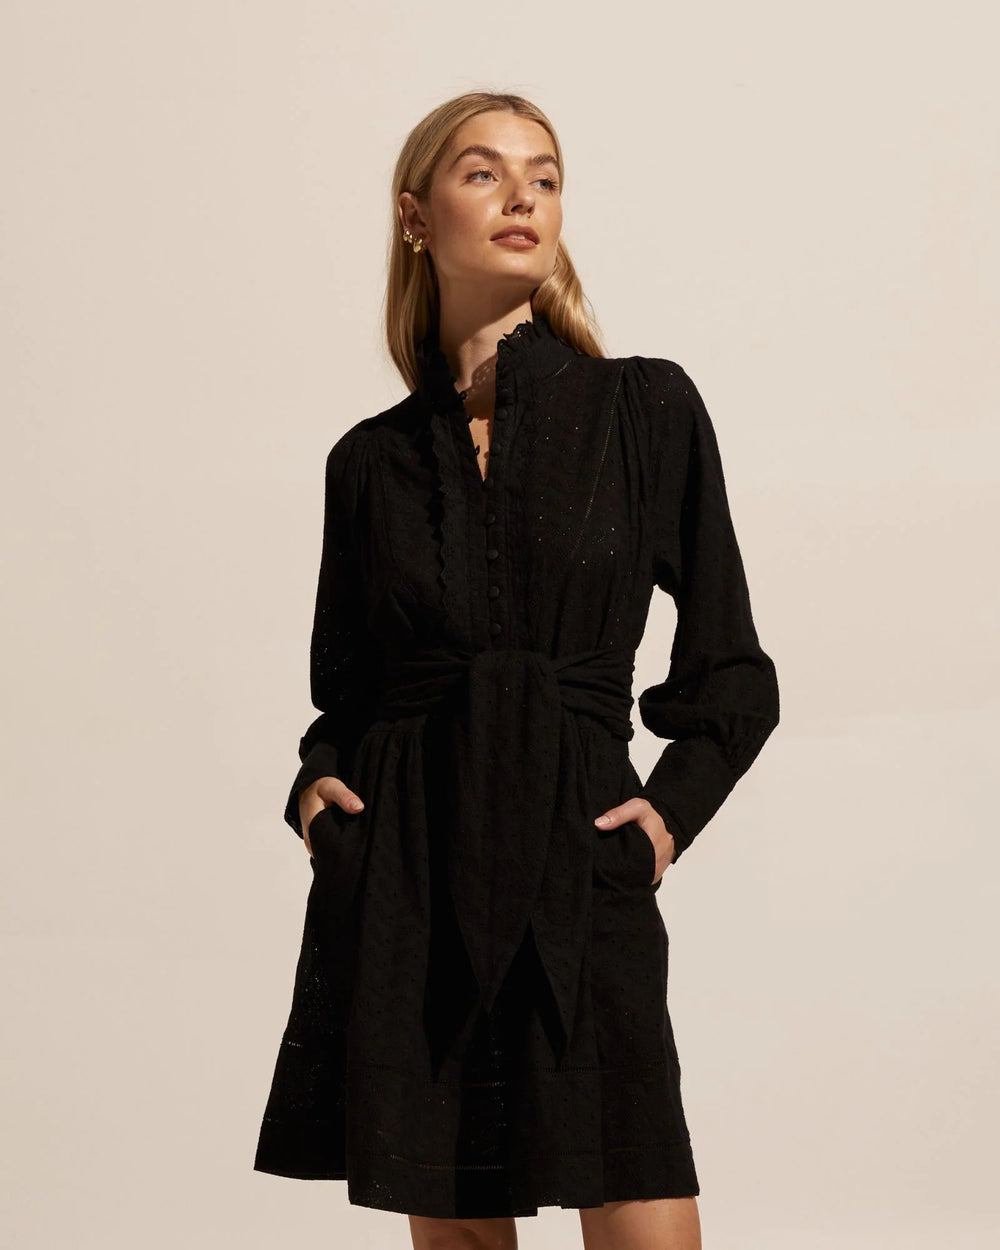 Velour Dress - Black dress Zoe Kratzmann   